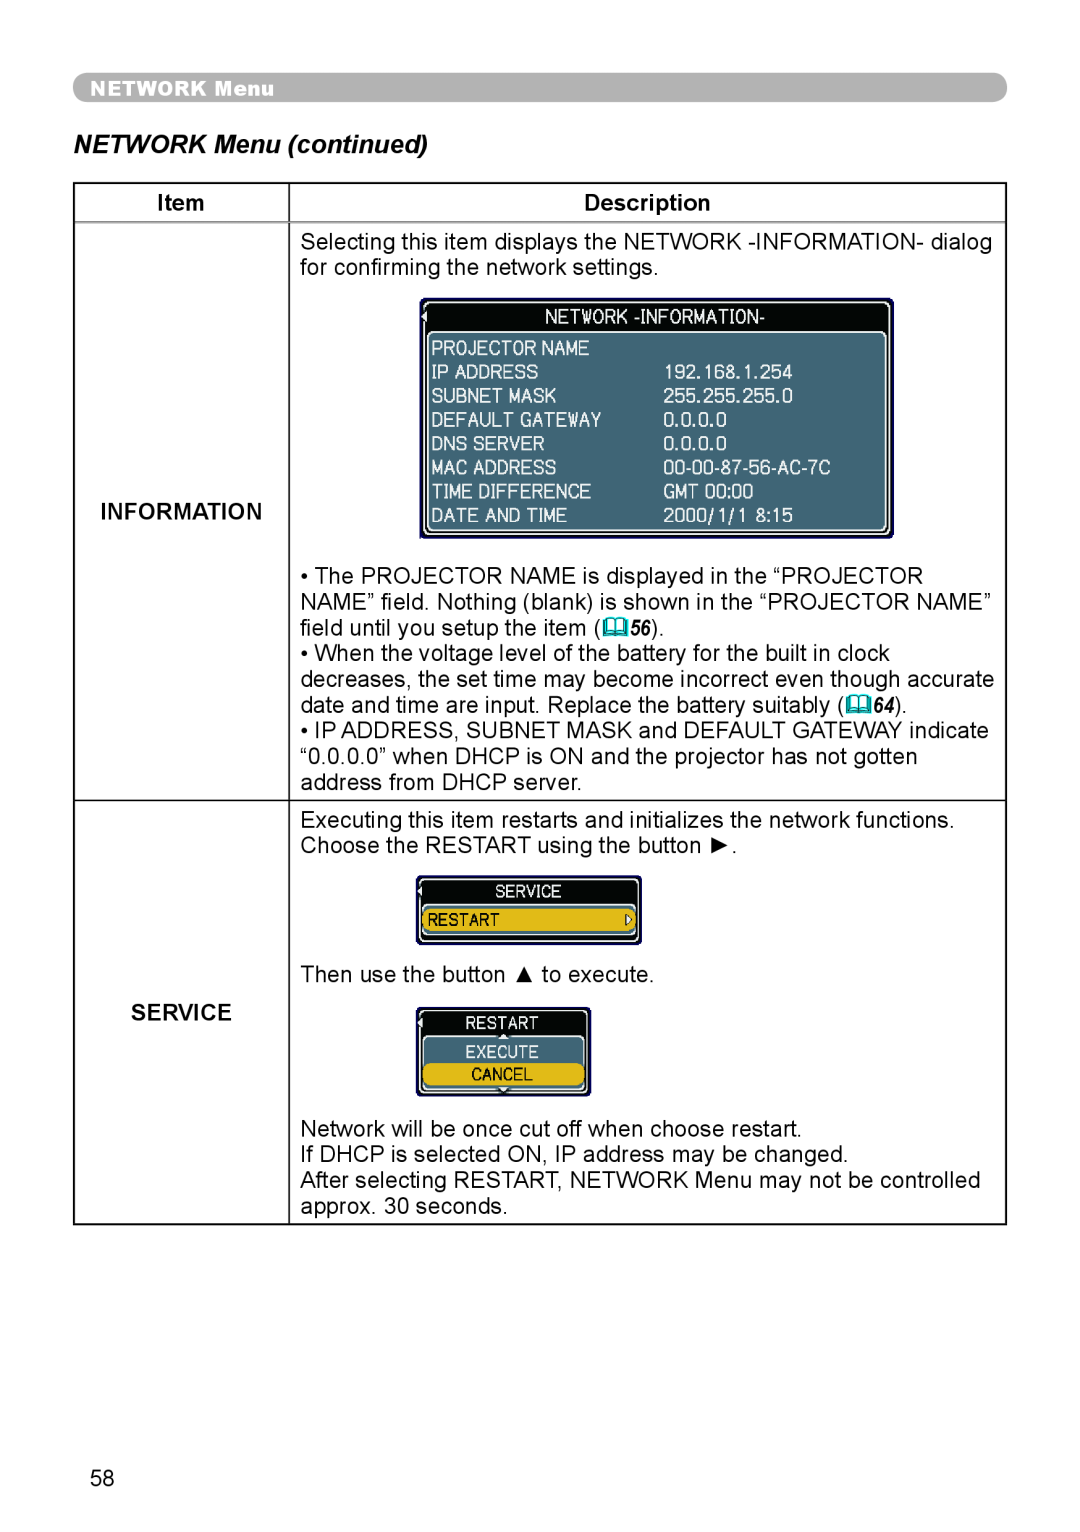 Hitachi CP-X206, CP-X306 user manual NETWORK Menu continued, Description, Information, Service 